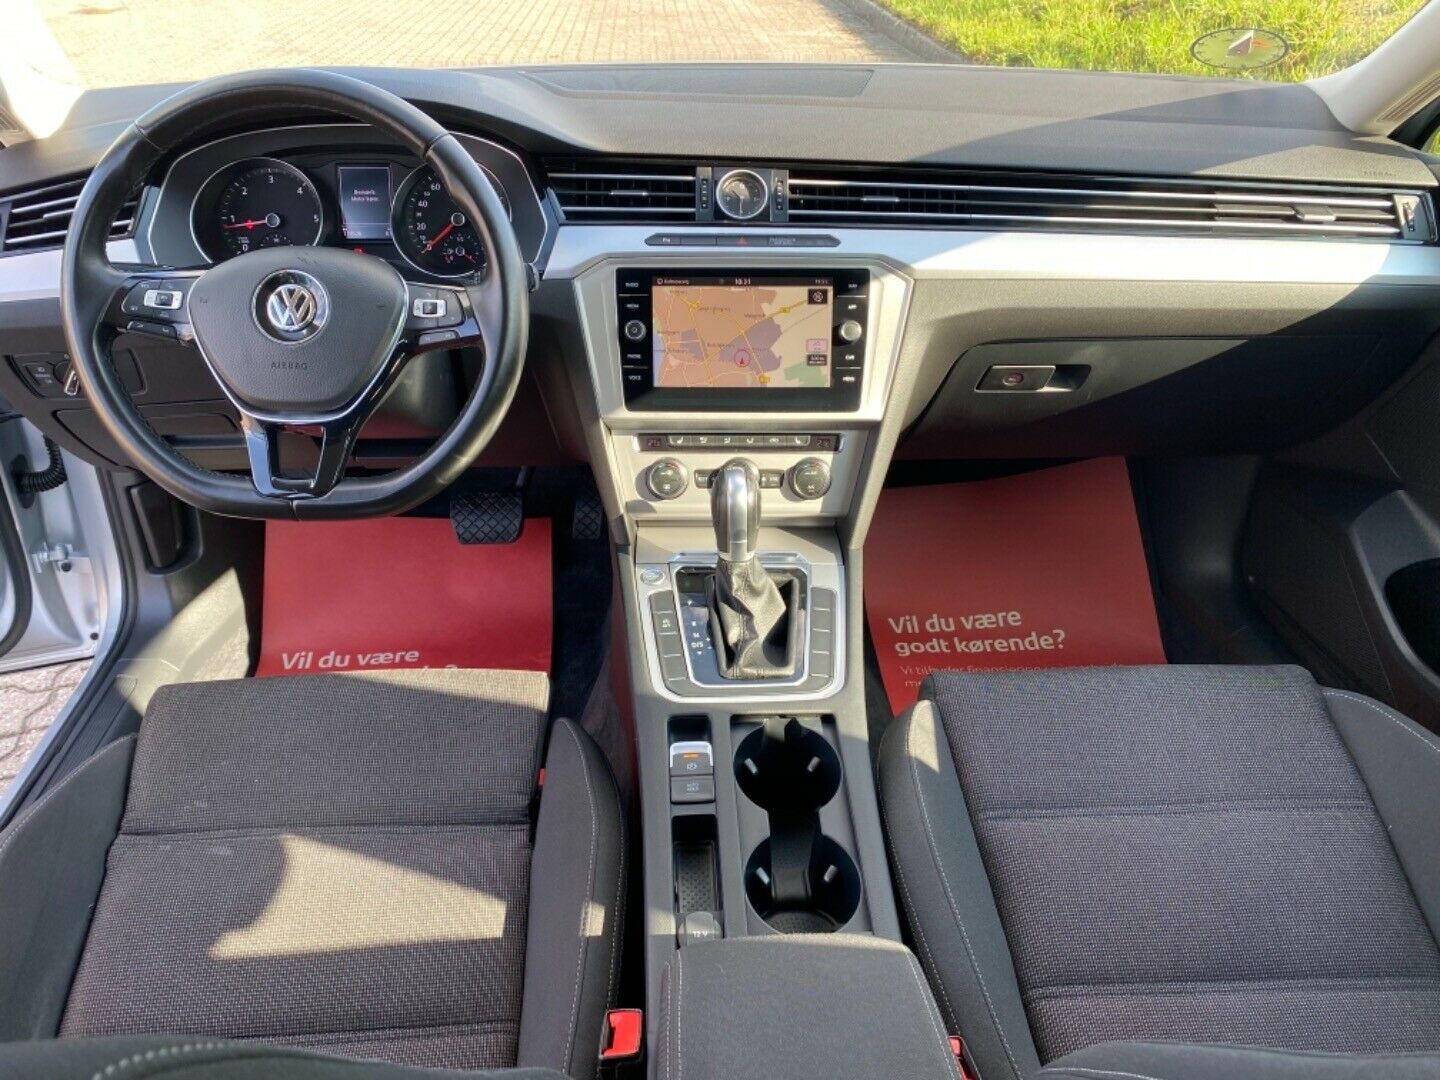 VW Passat TDi 150 Comfortline Variant DSG